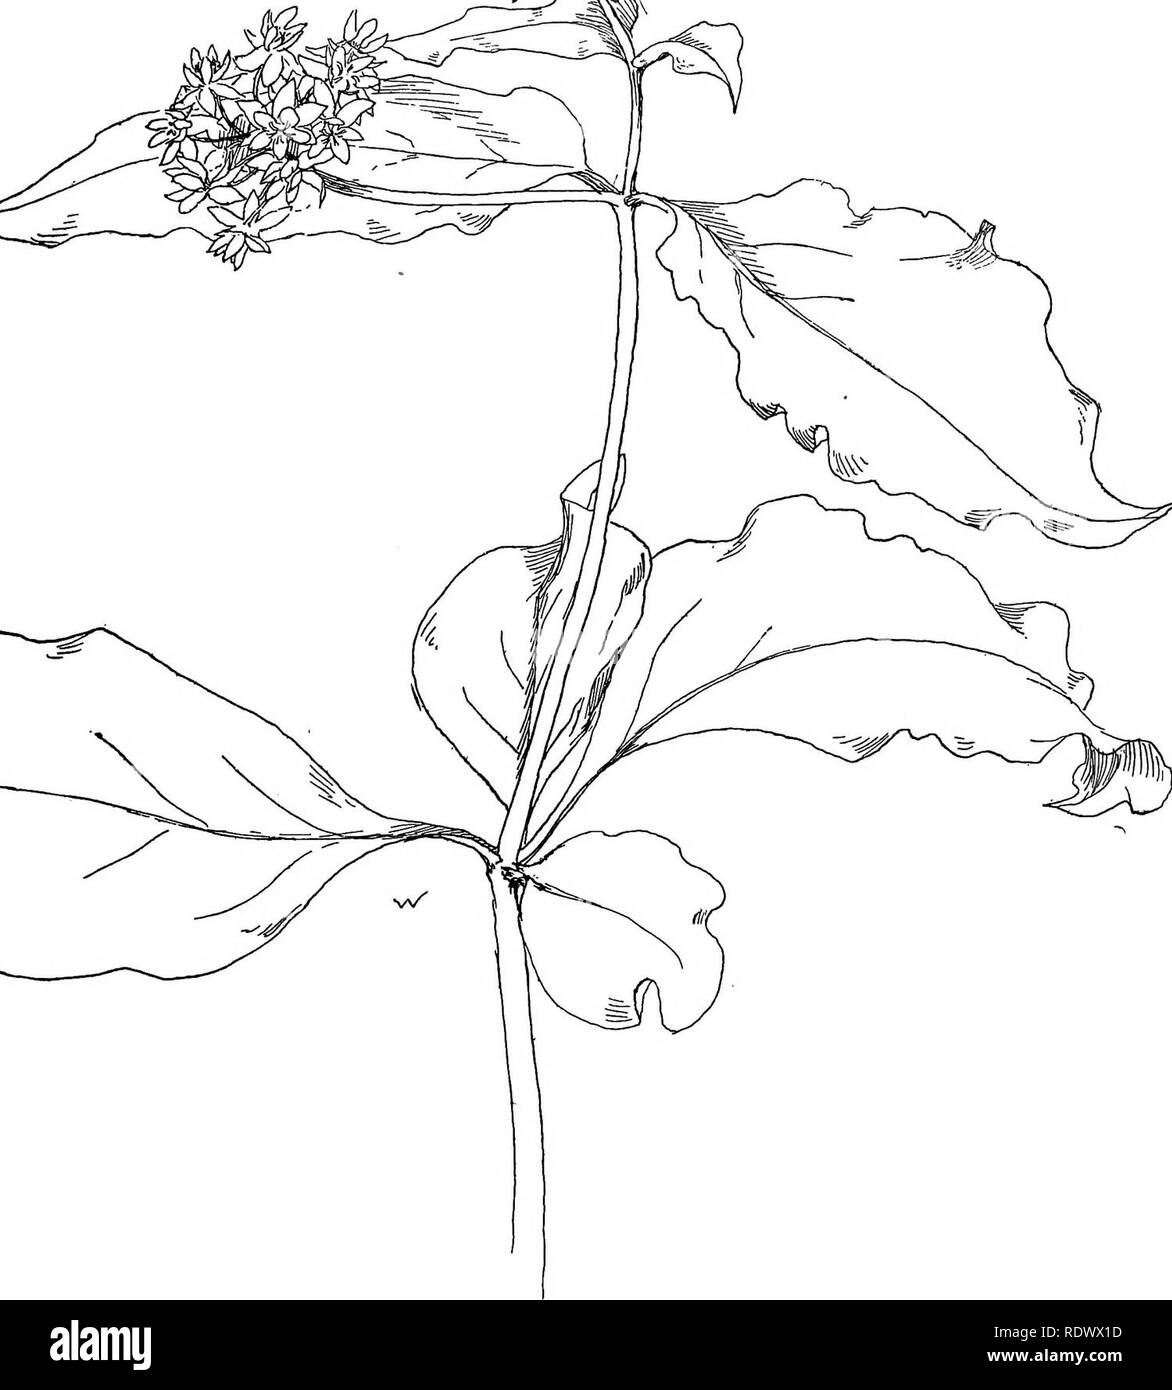 Four leaved milkweed Black and White Stock Photos & Images - Alamy